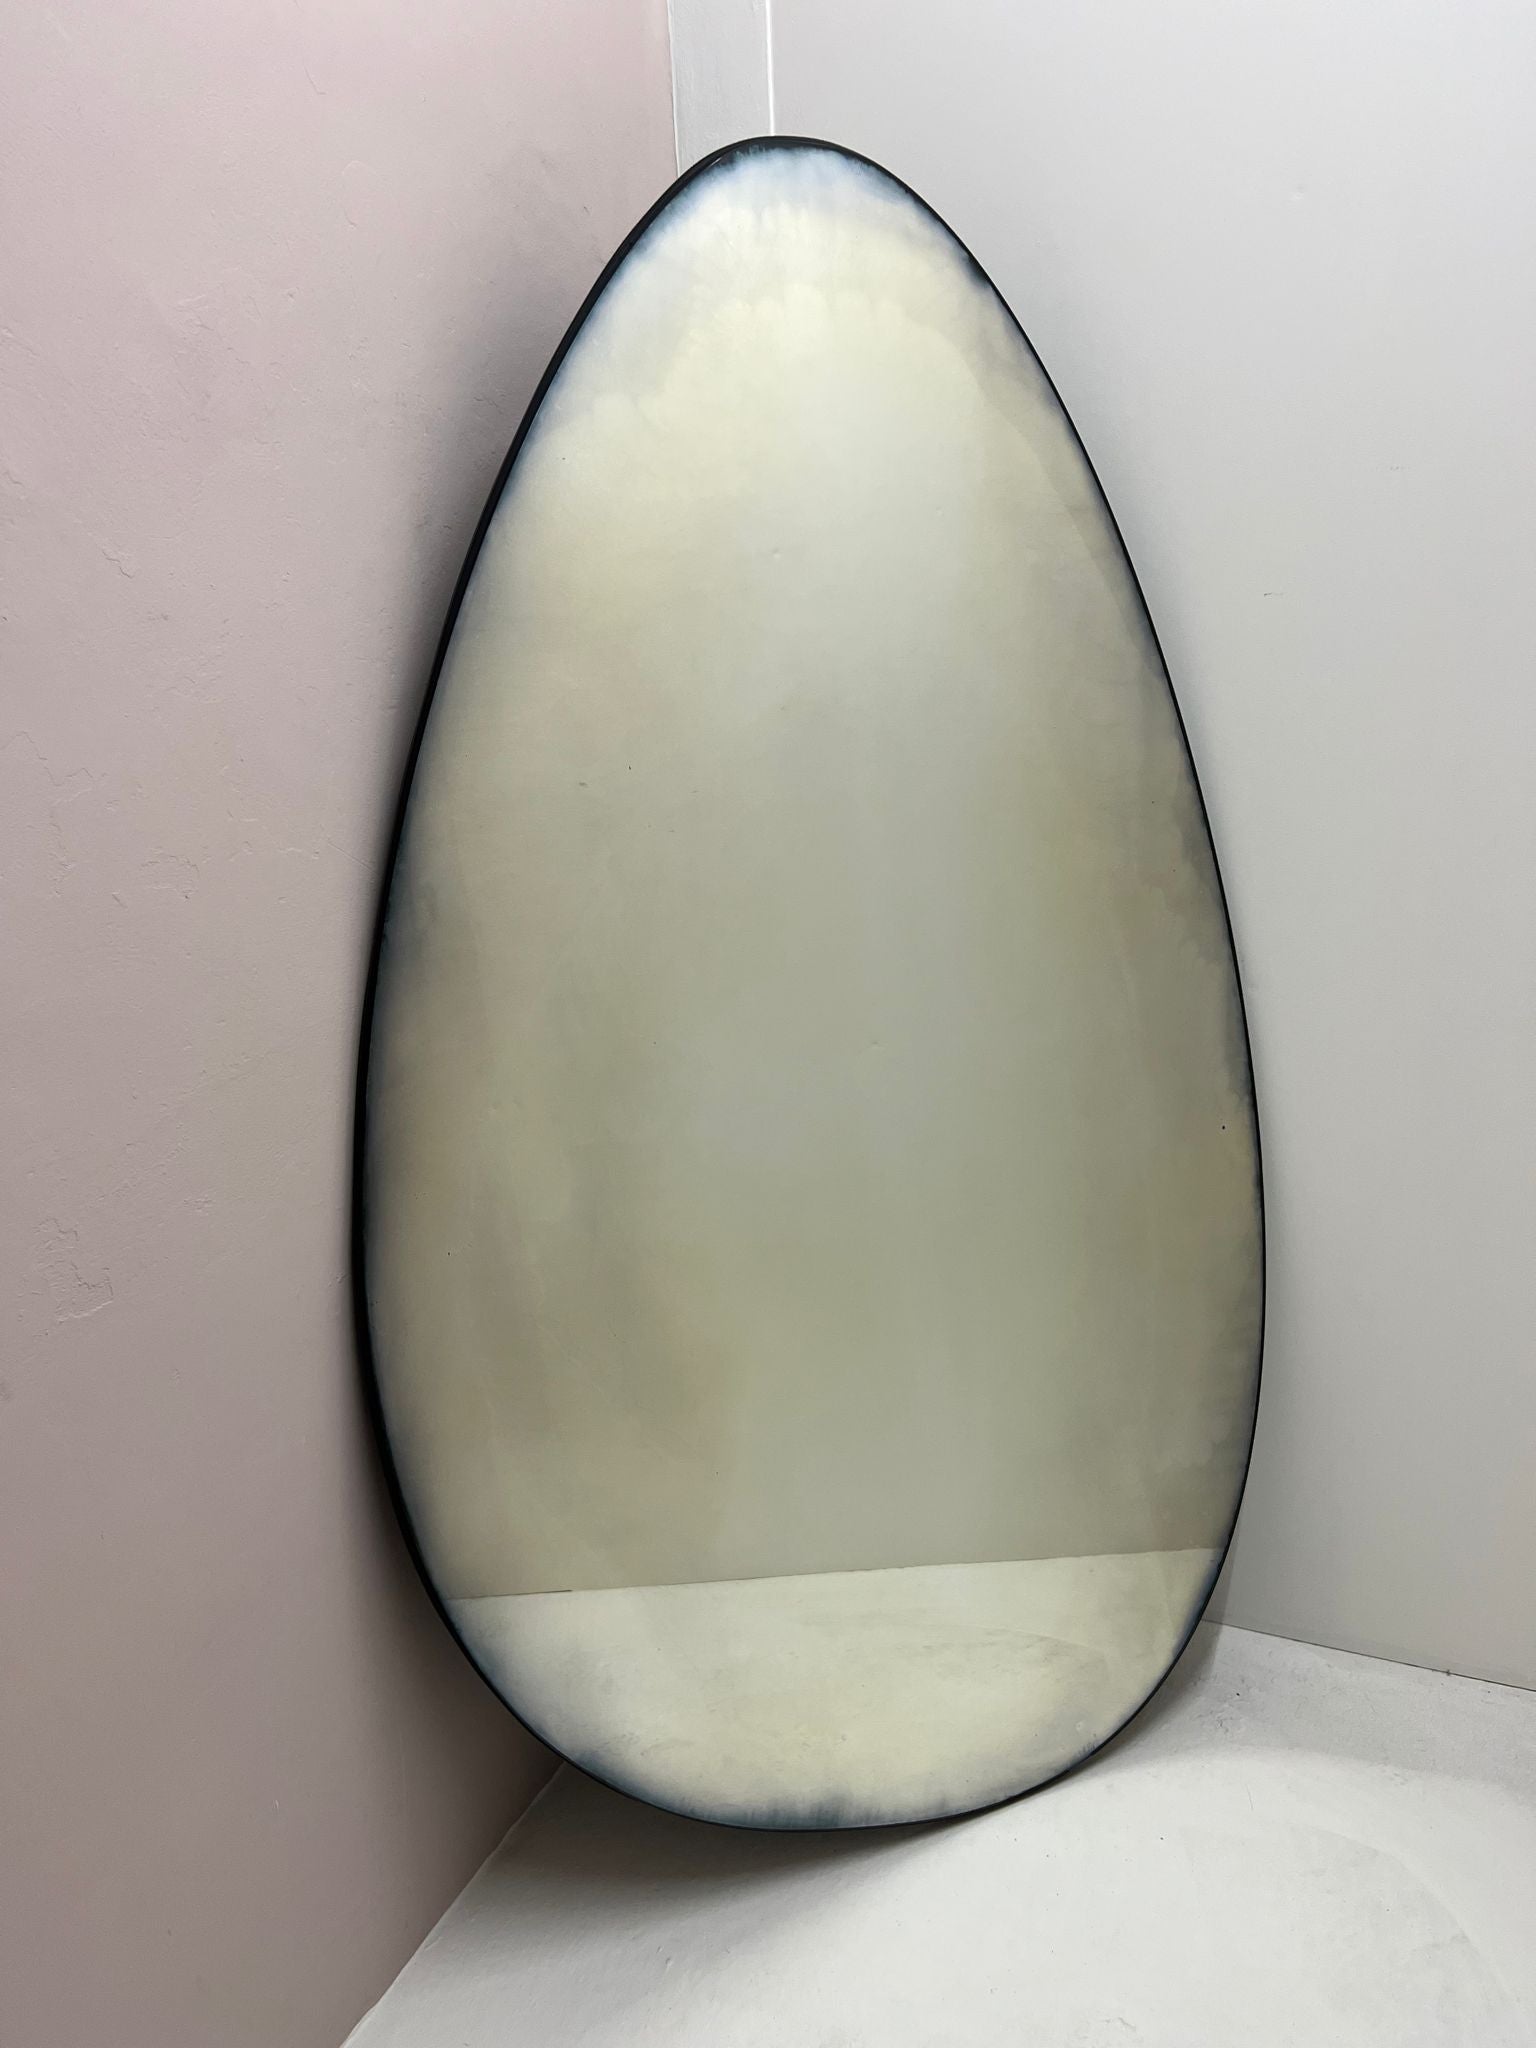 Smoked Elliptical antiqued mirror - 1685 x 980mm